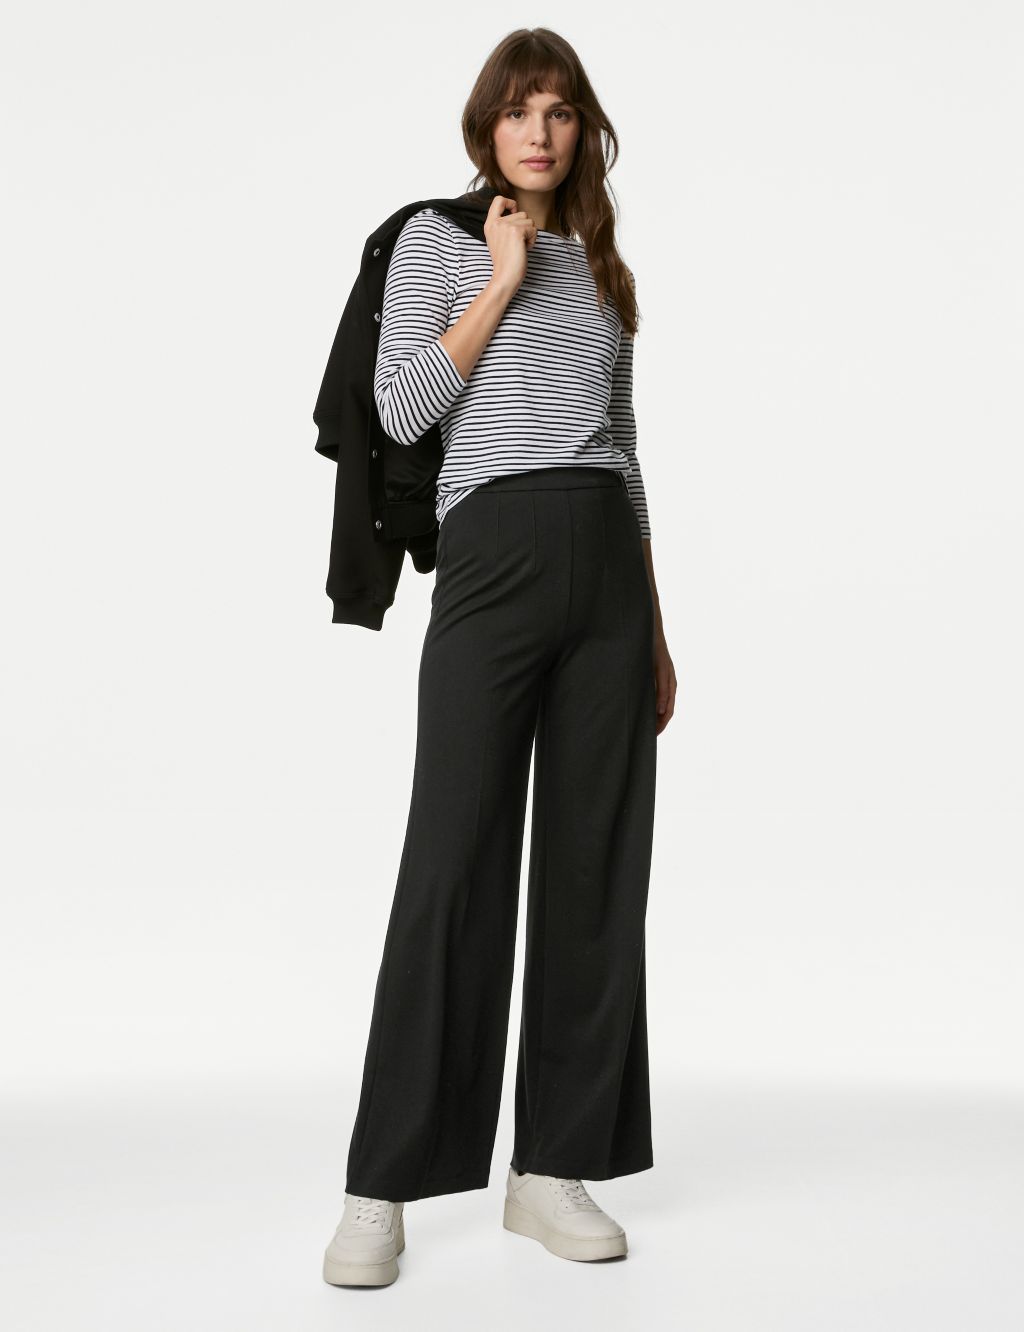 H & M@ Black Size 6 Ladies Casual Pants